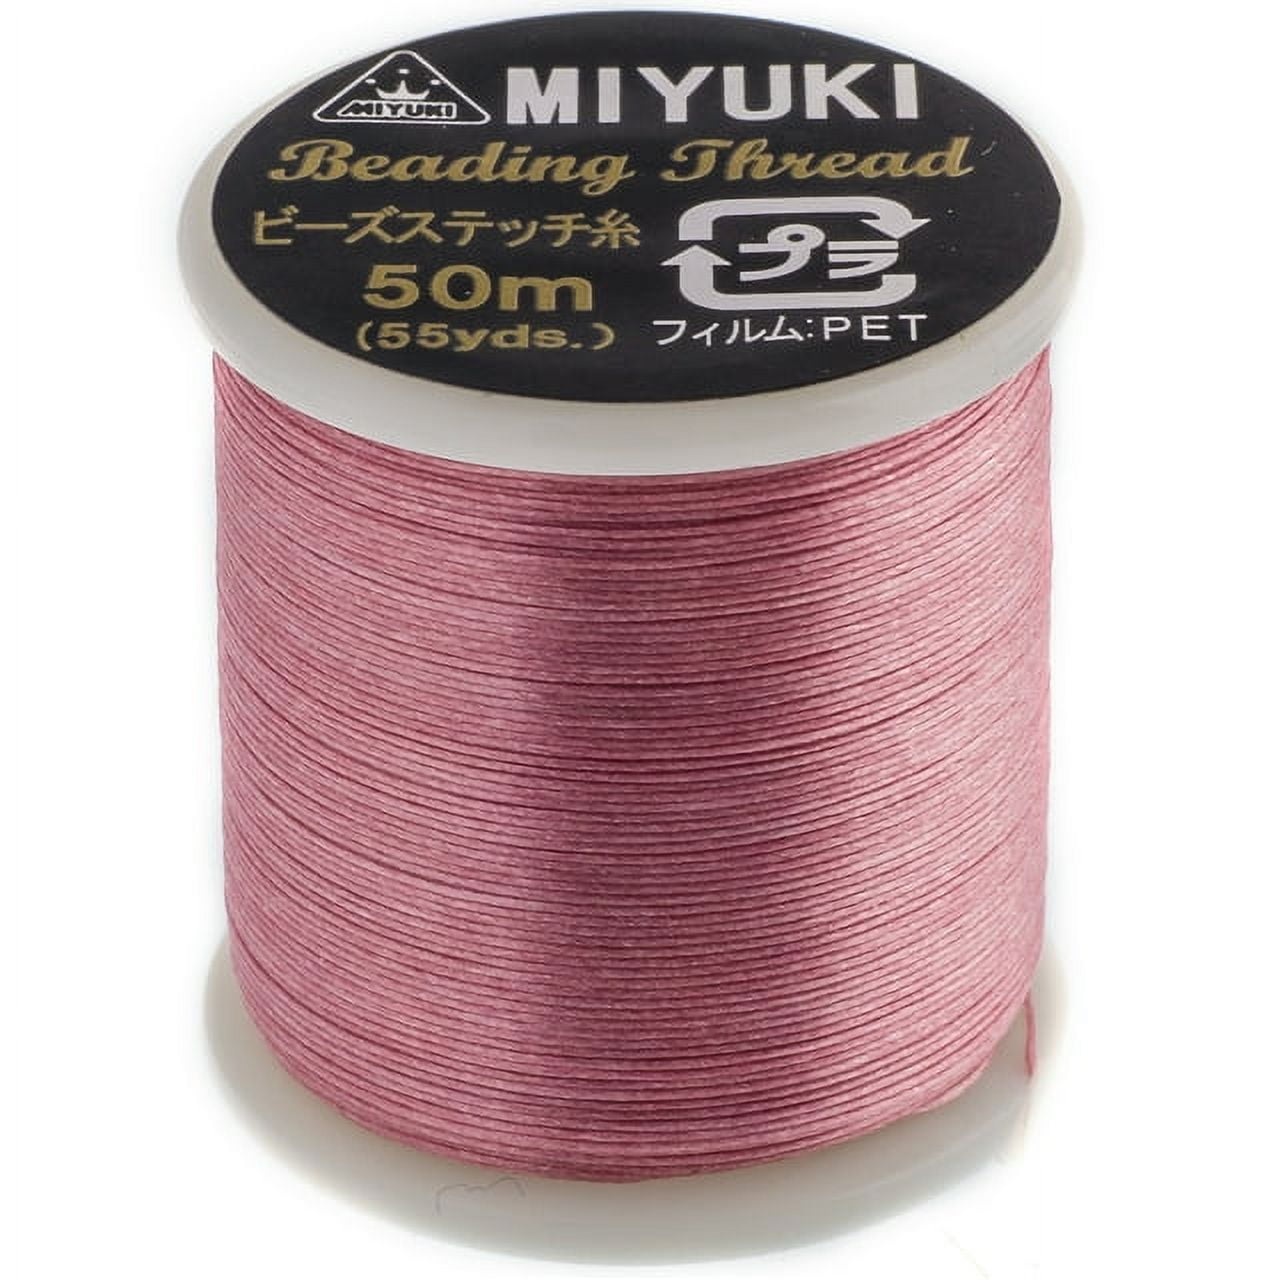 Miyuki Nylon Beading Thread B Black (50m) for DIY Jewelry Making 